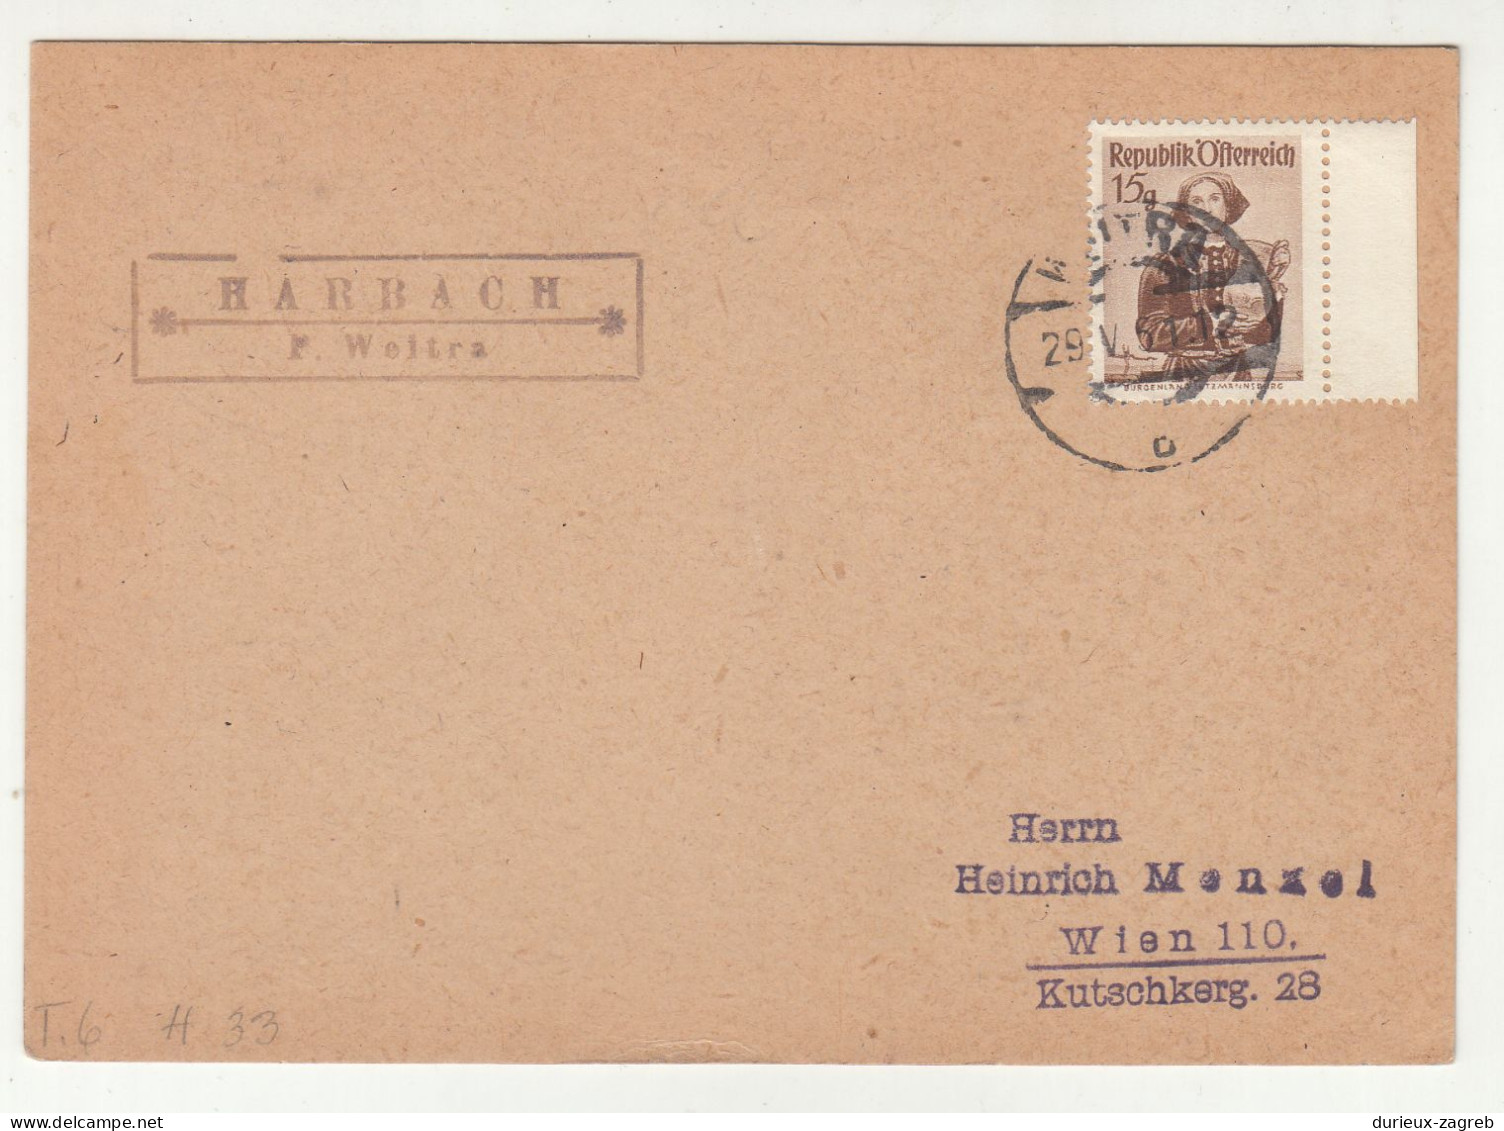 Harbach P. Weitra Mark On Card Posted? 1961 B240401 - Brieven En Documenten